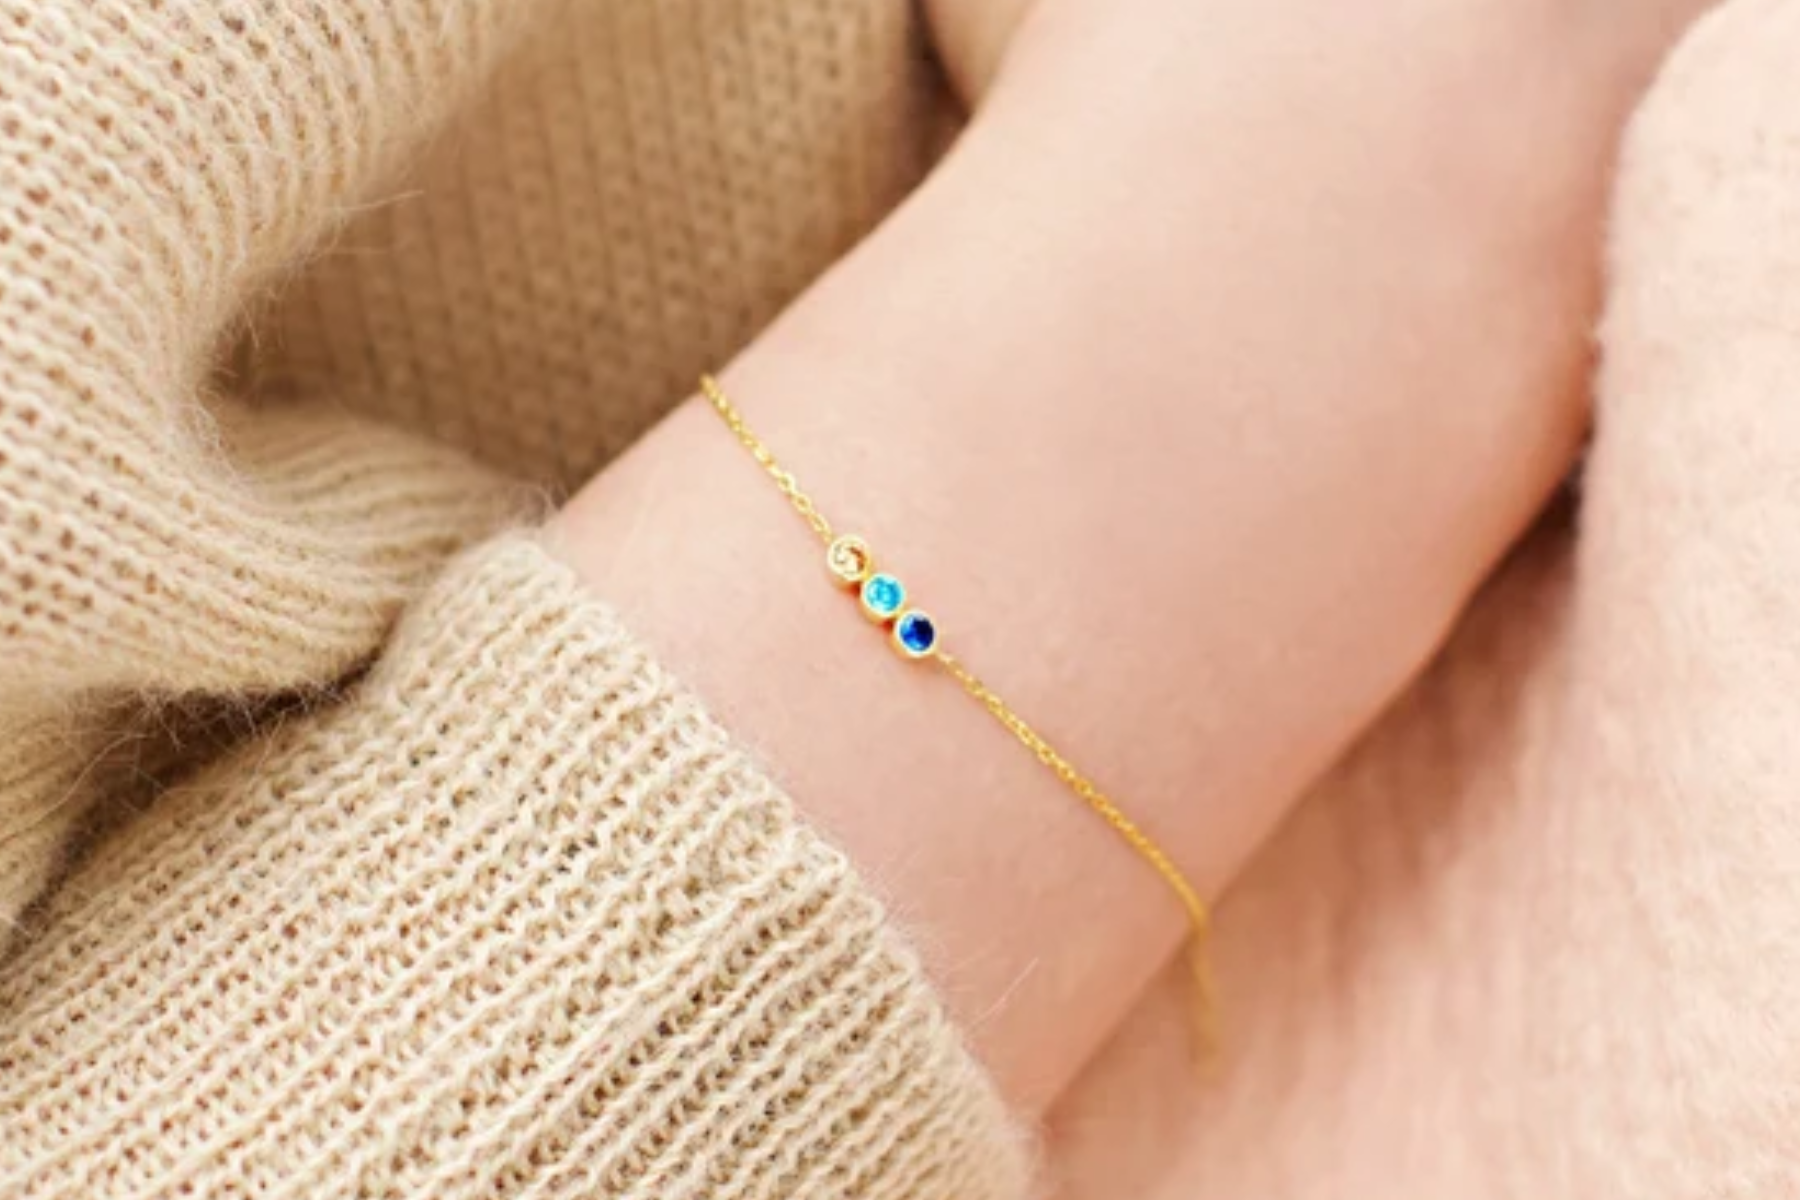 A woman wears a bracelet with three little birthstones